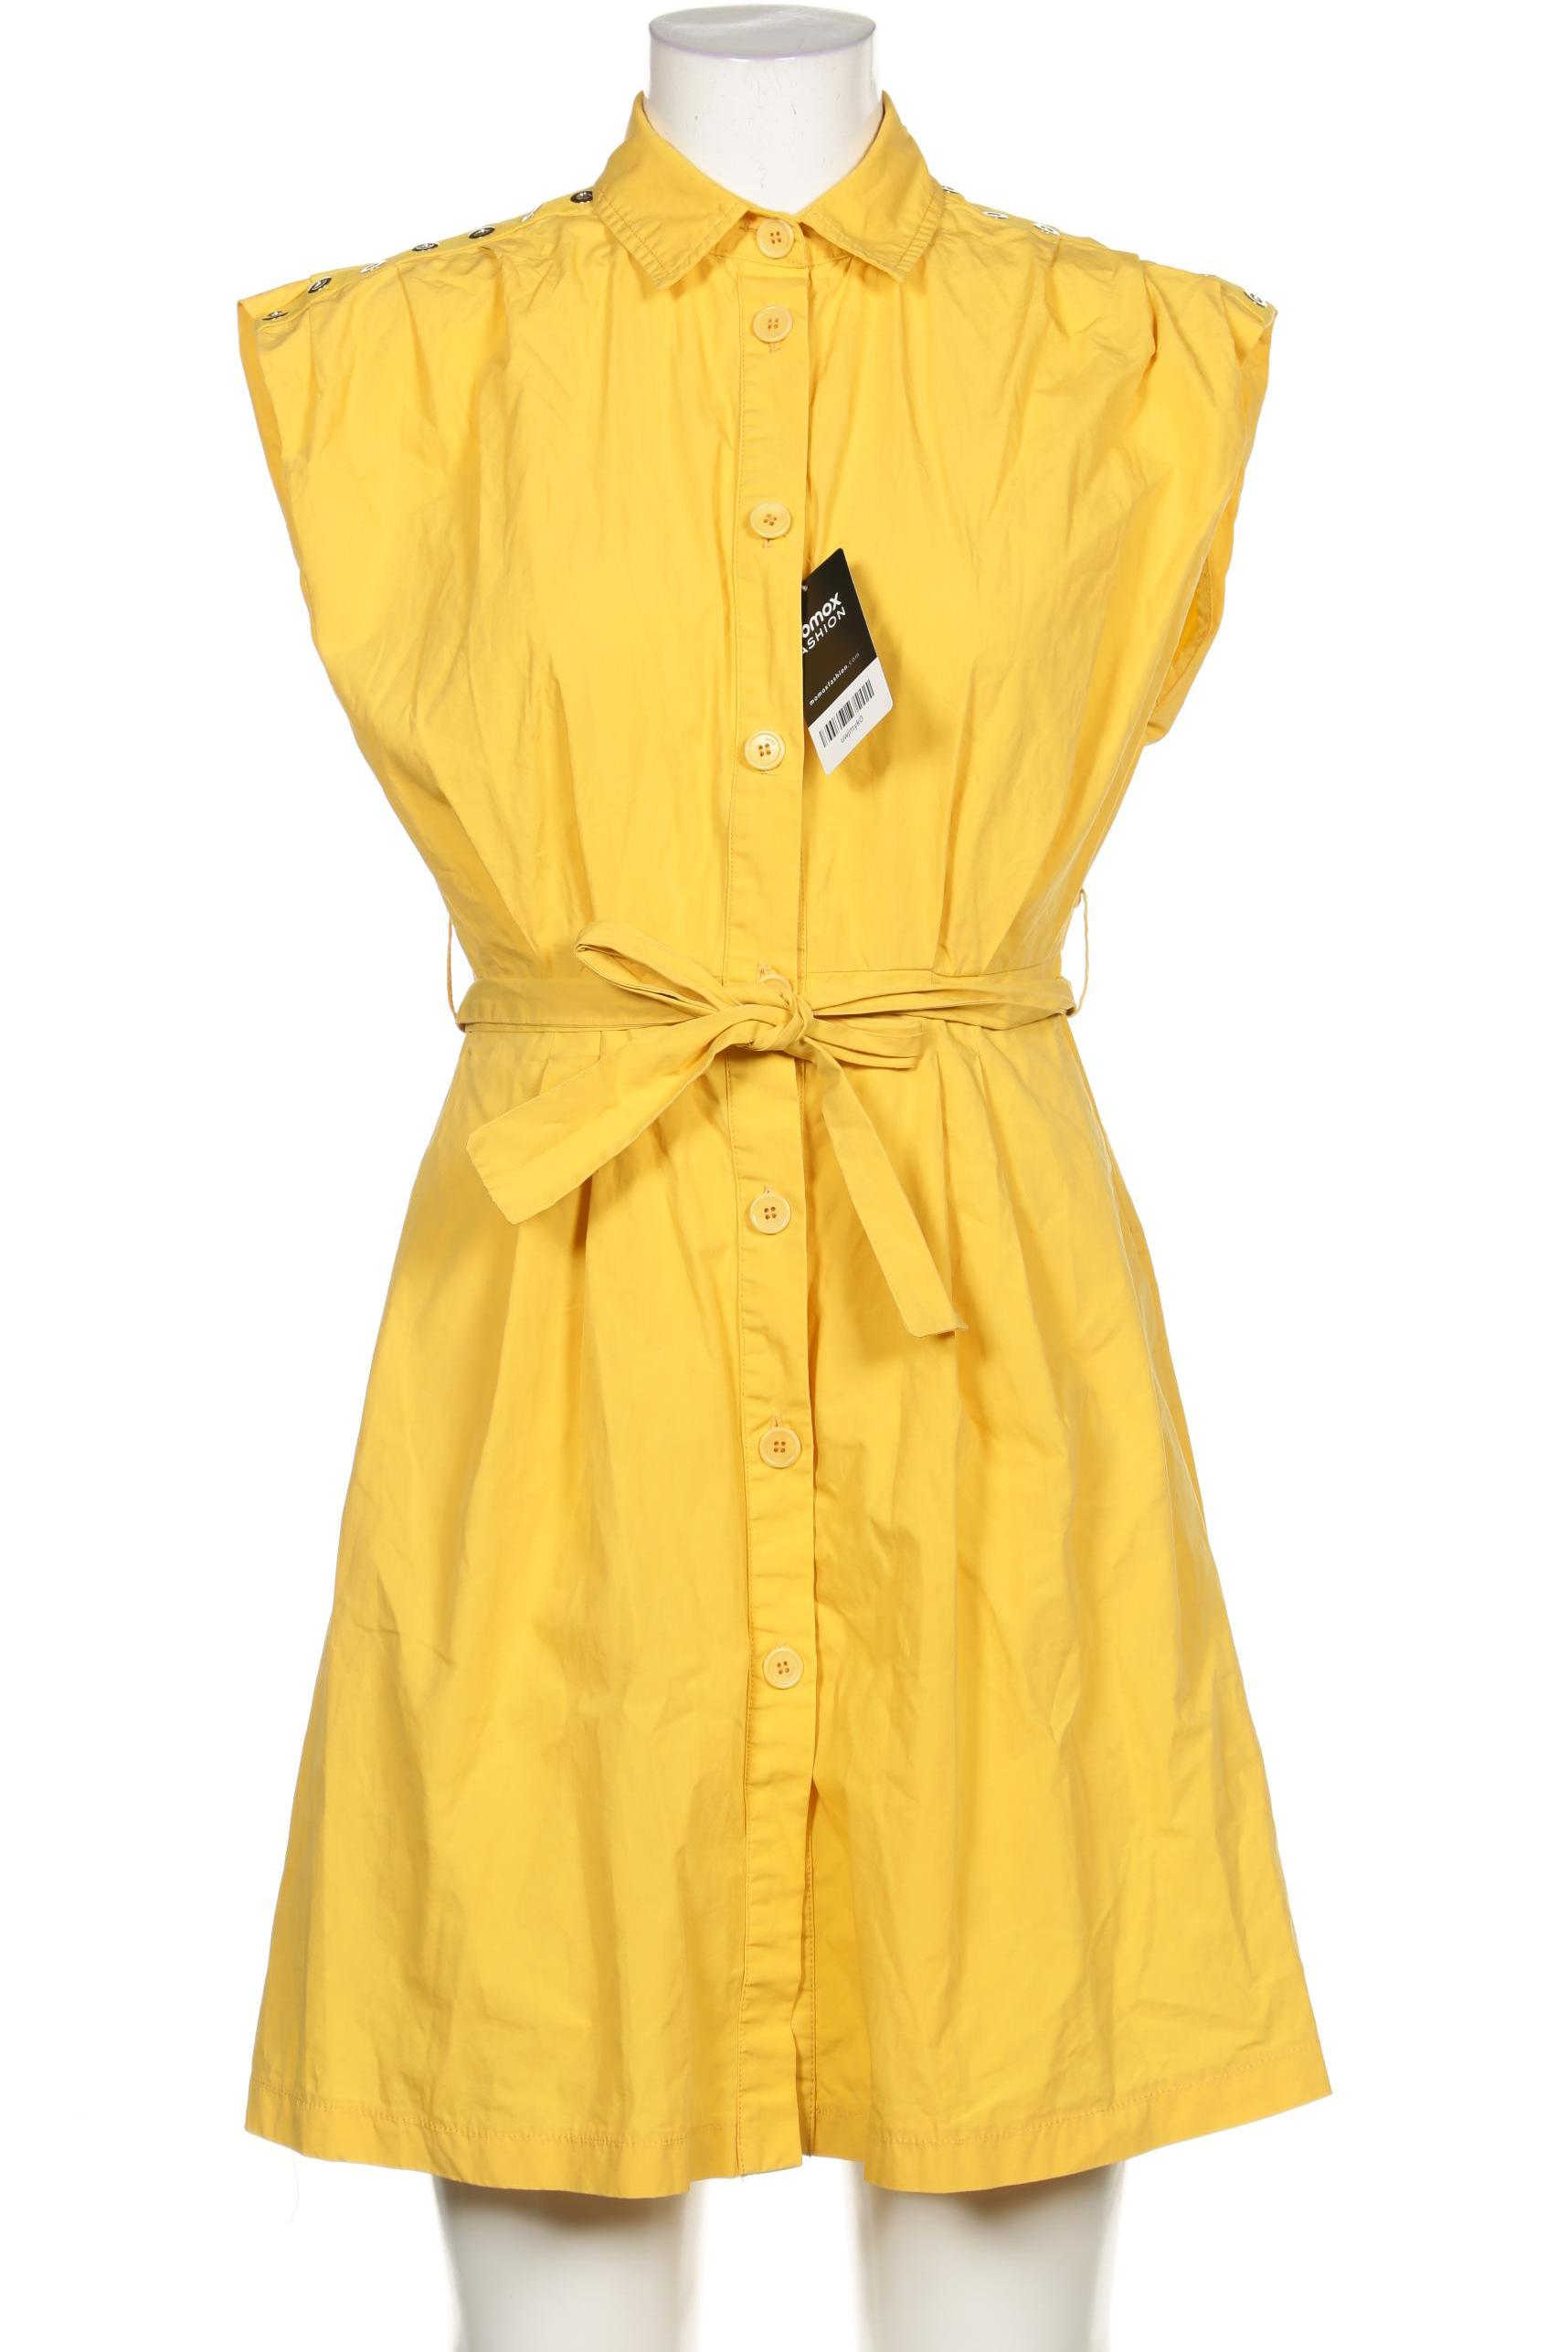 LIU JO Damen Kleid, gelb von LIU JO